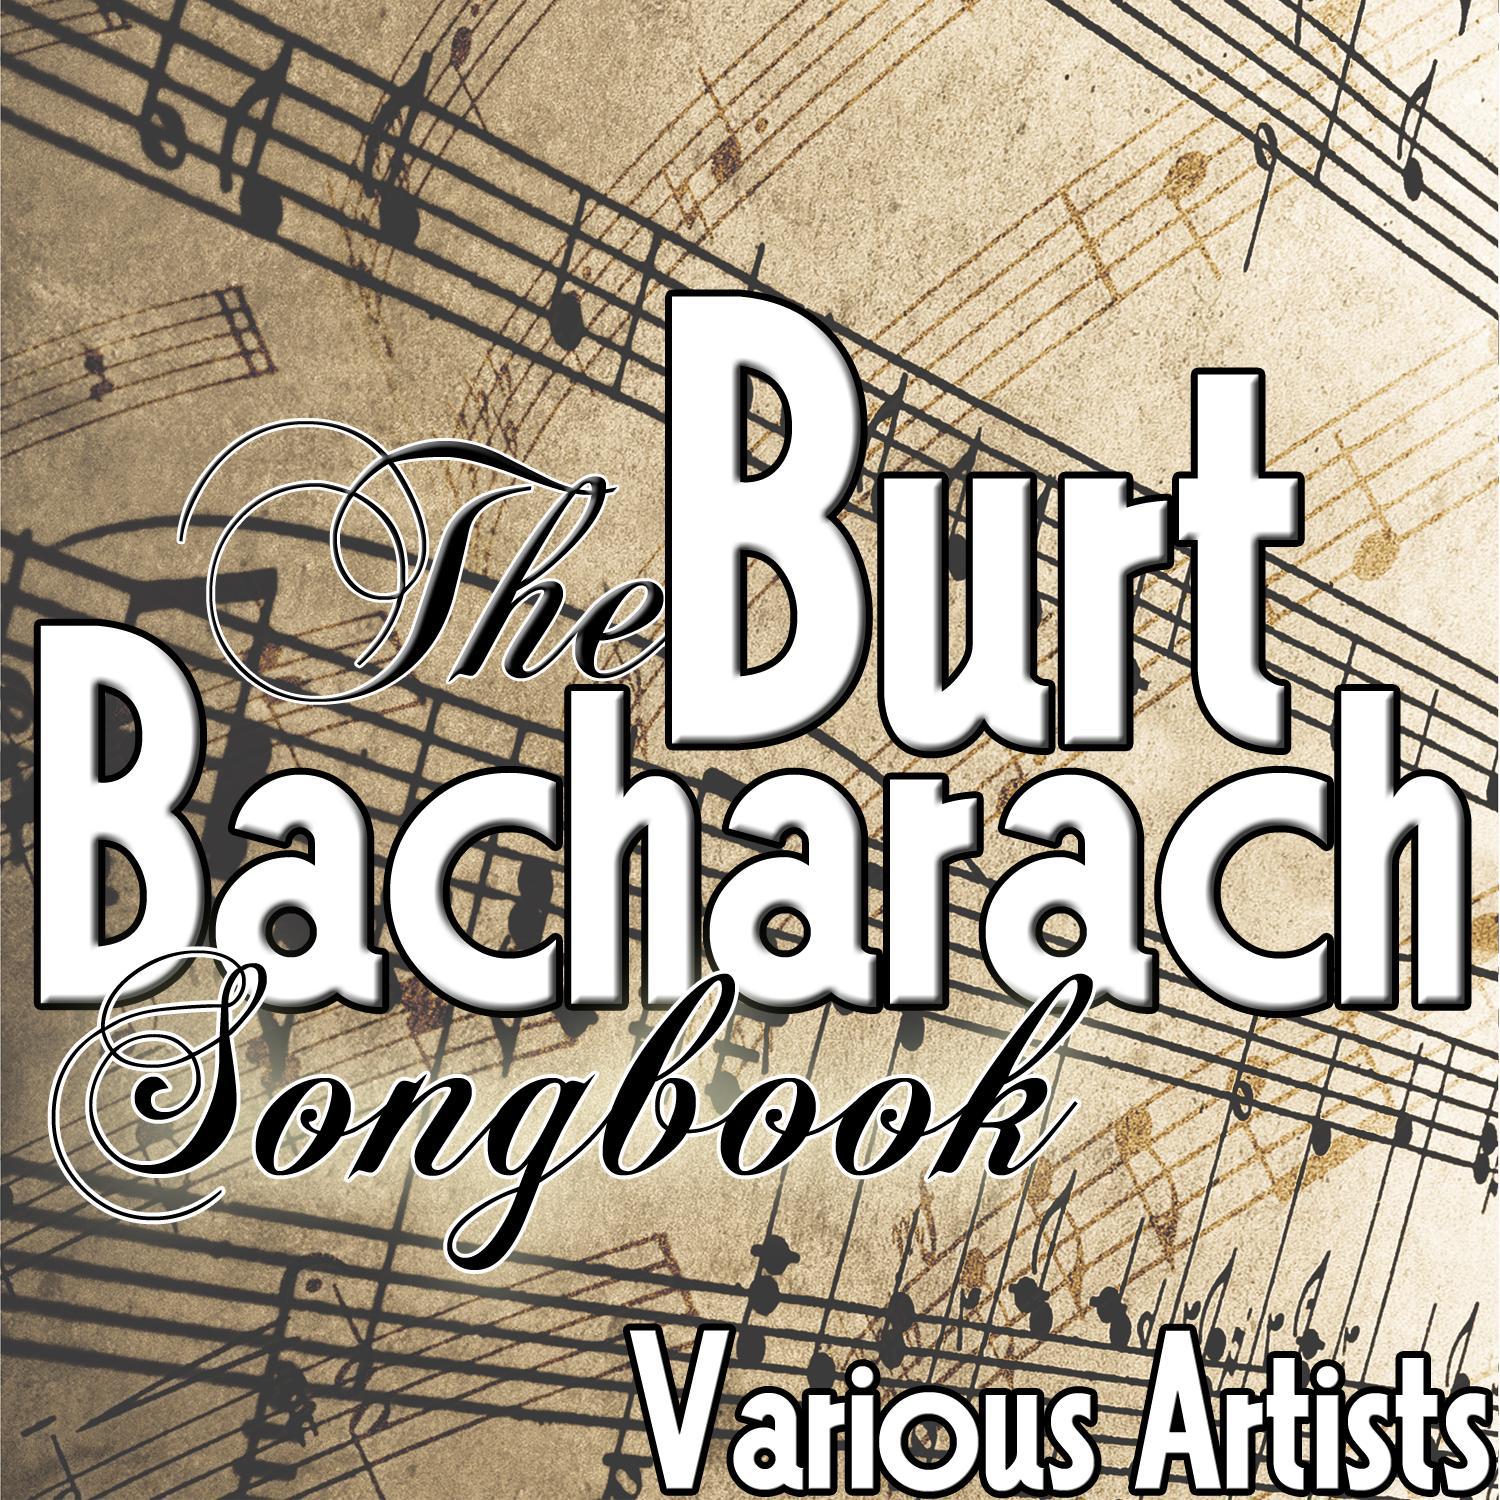 The Burt Bacharach Songbook